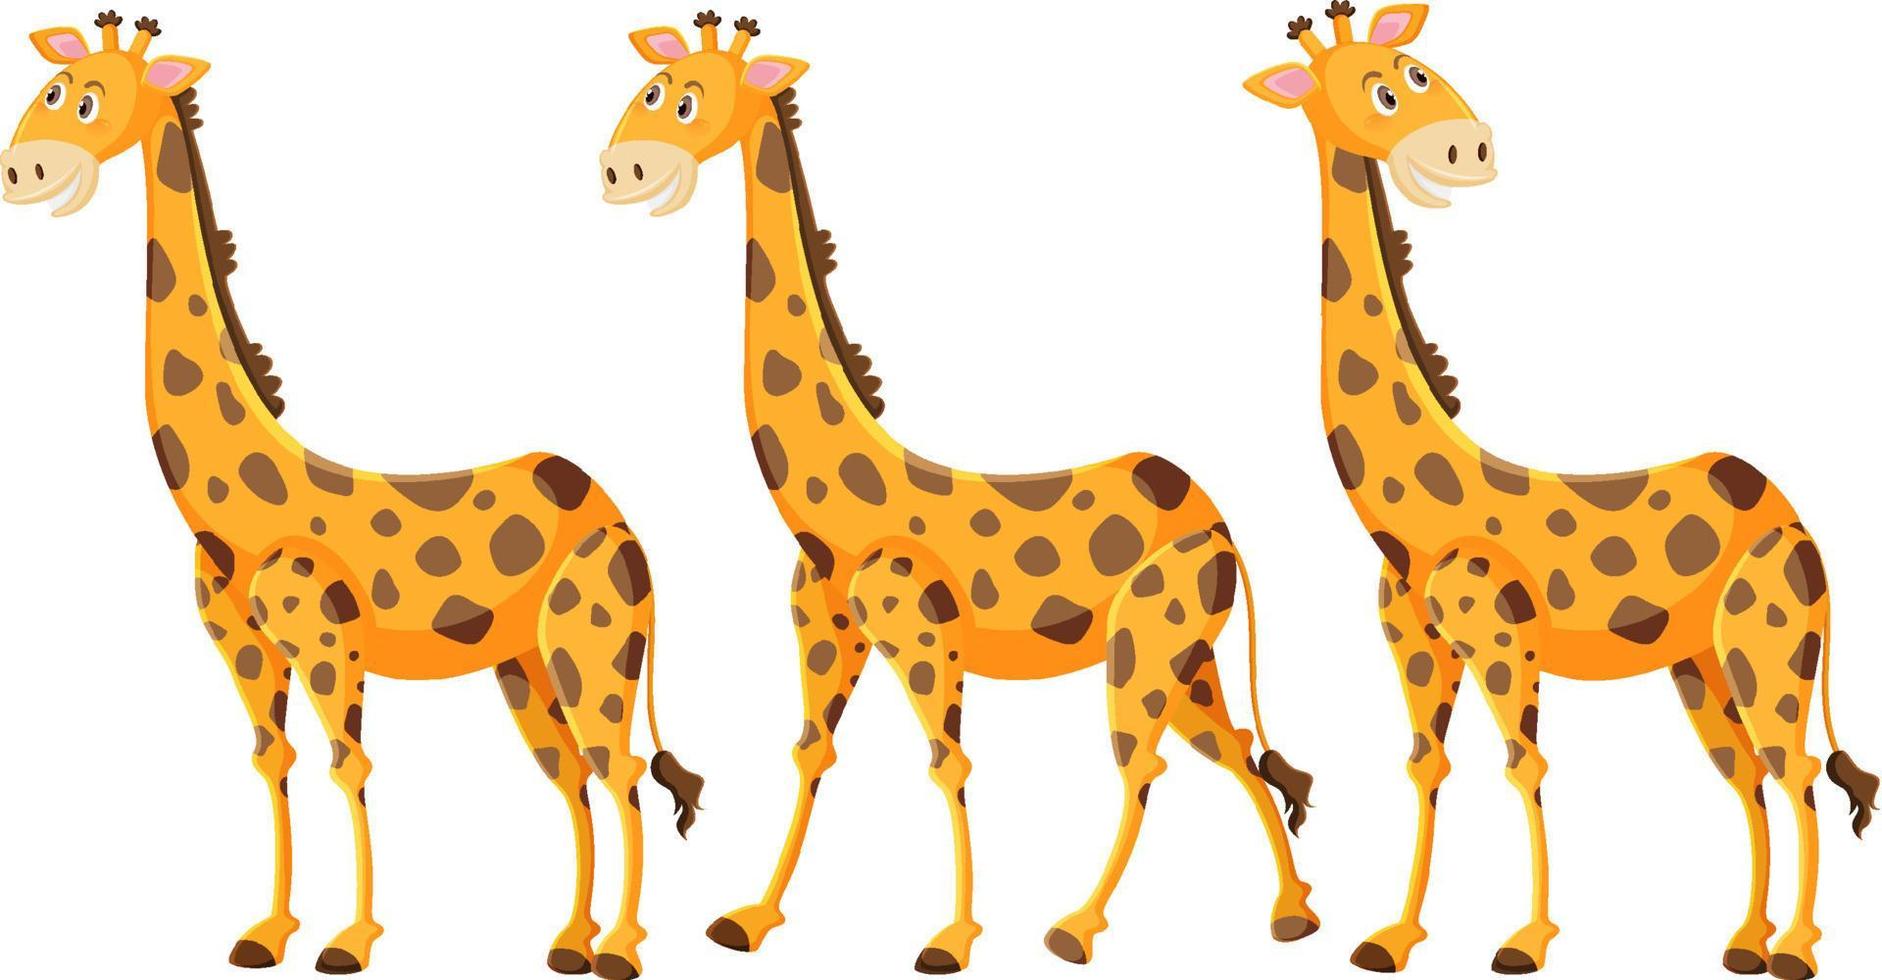 Cute giraffe cartoon on white background vector